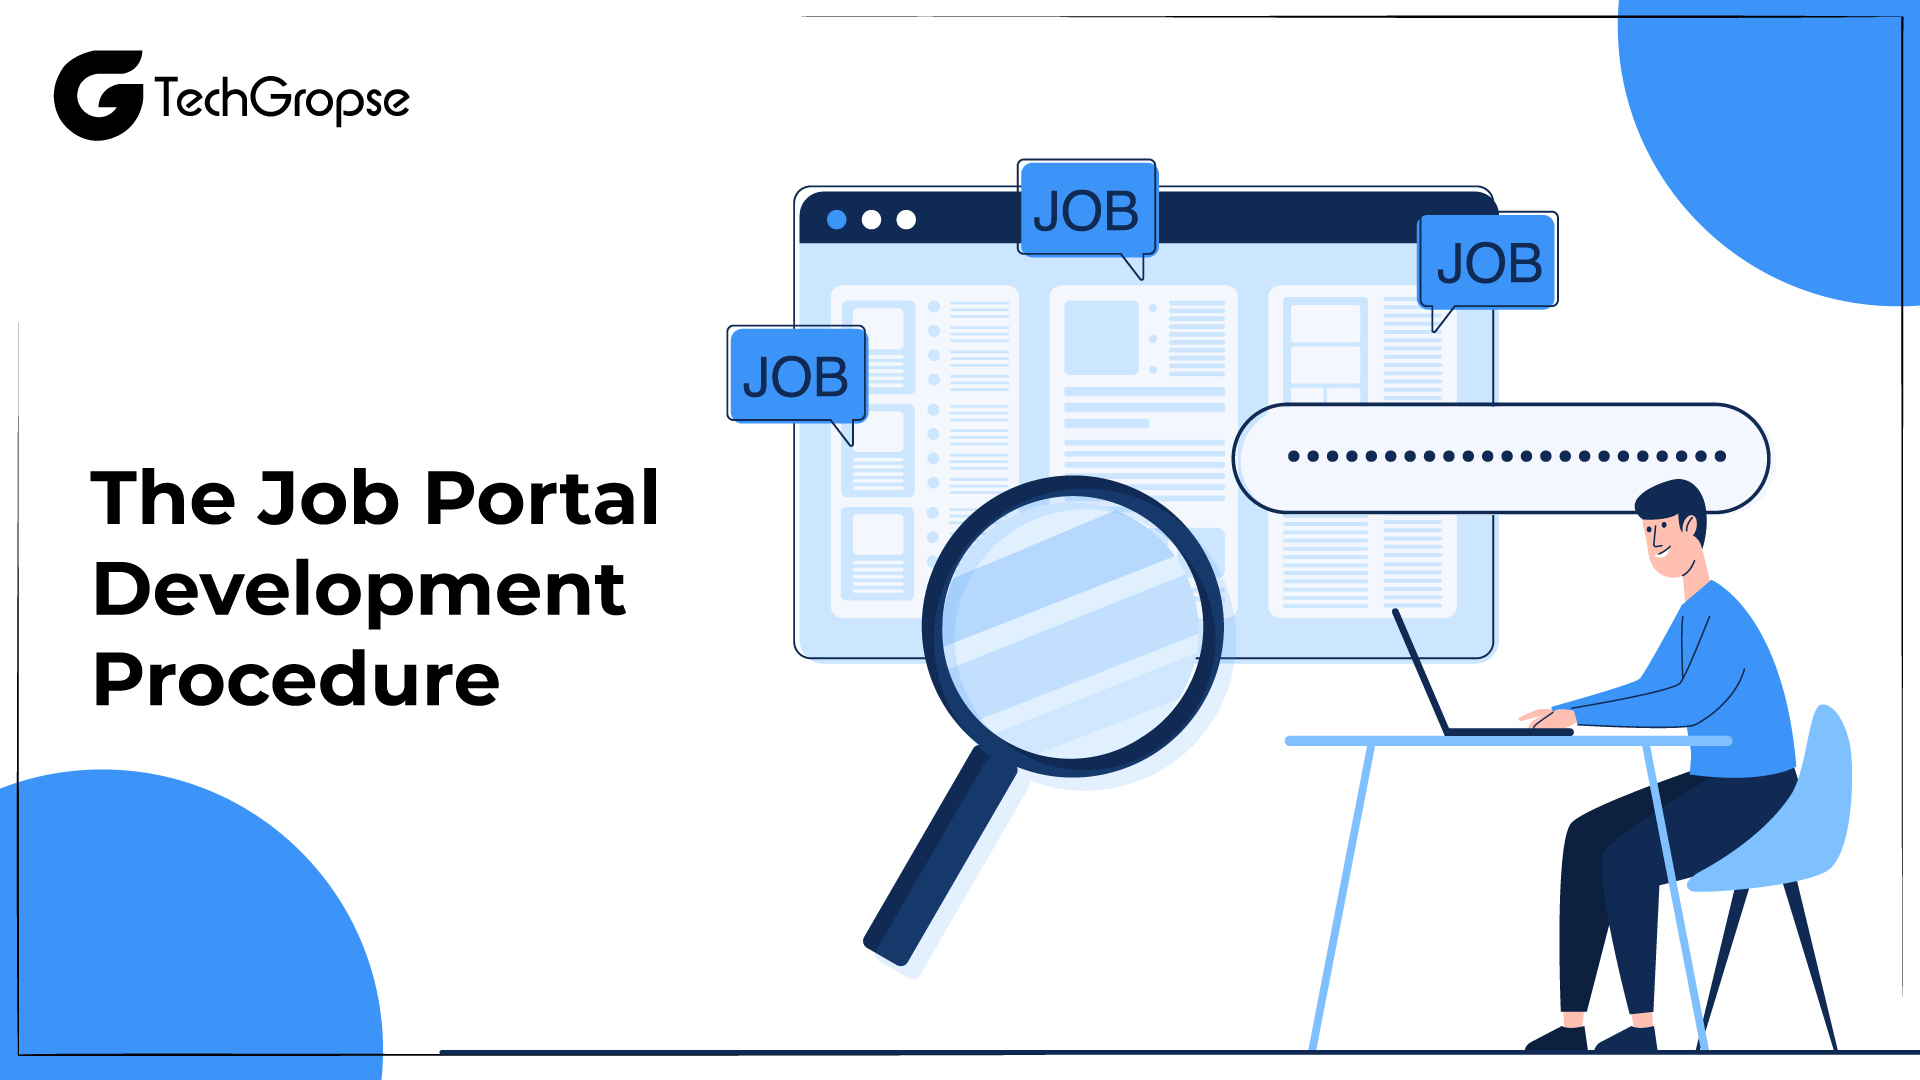 The Job Portal Development Procedure